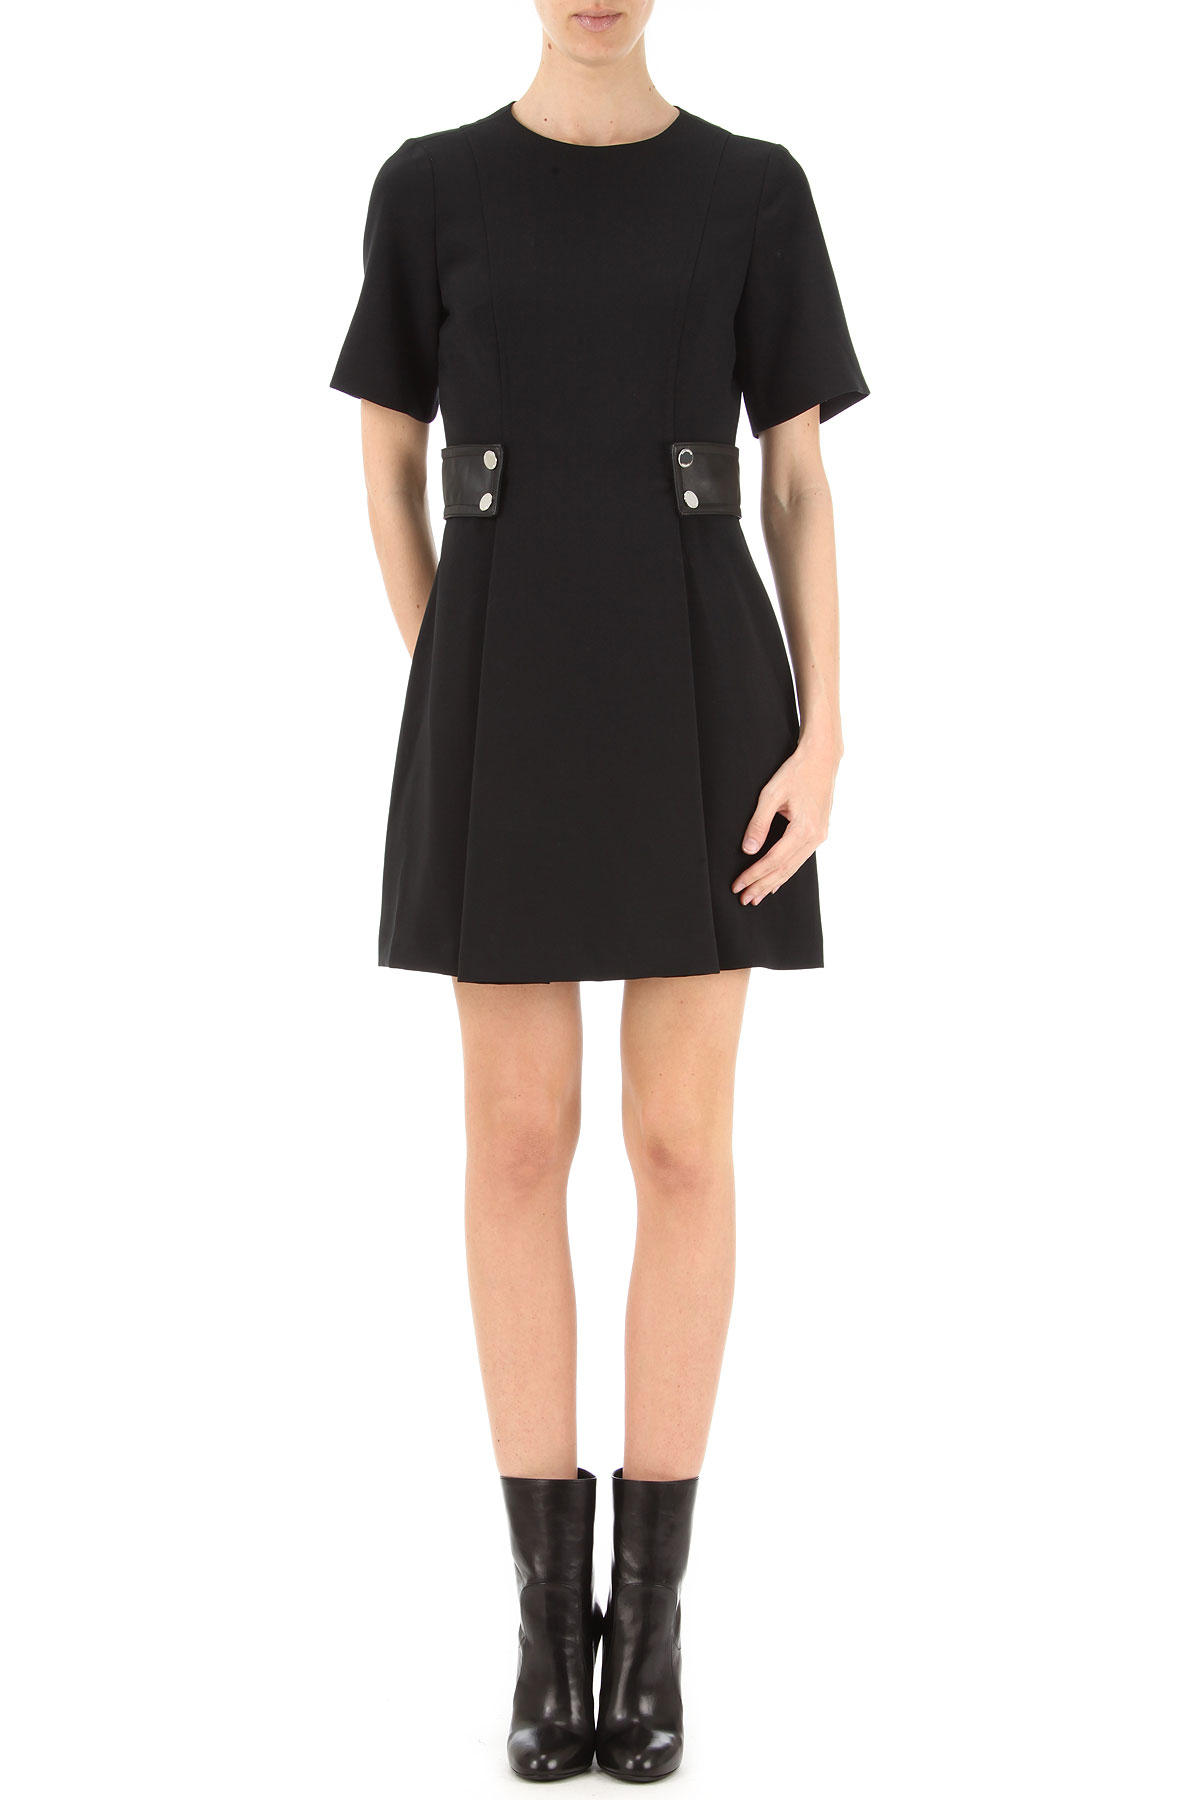 Womens Clothing Michael Kors, Style code: mf58vt31se-black-A416